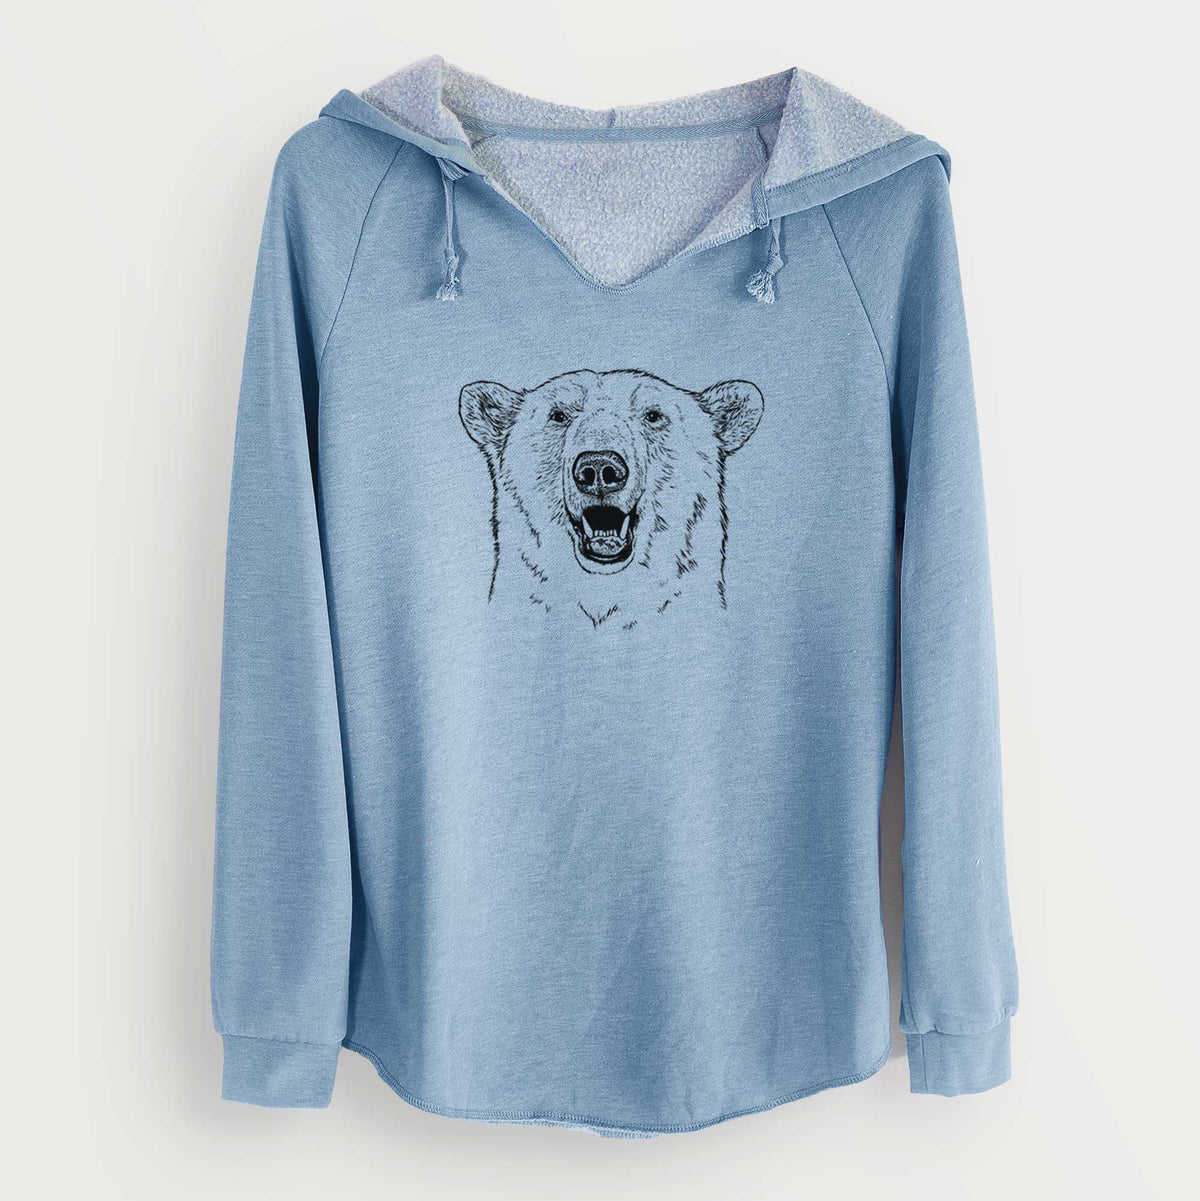 Ursus Maritimus - Polar Bear - Cali Wave Hooded Sweatshirt